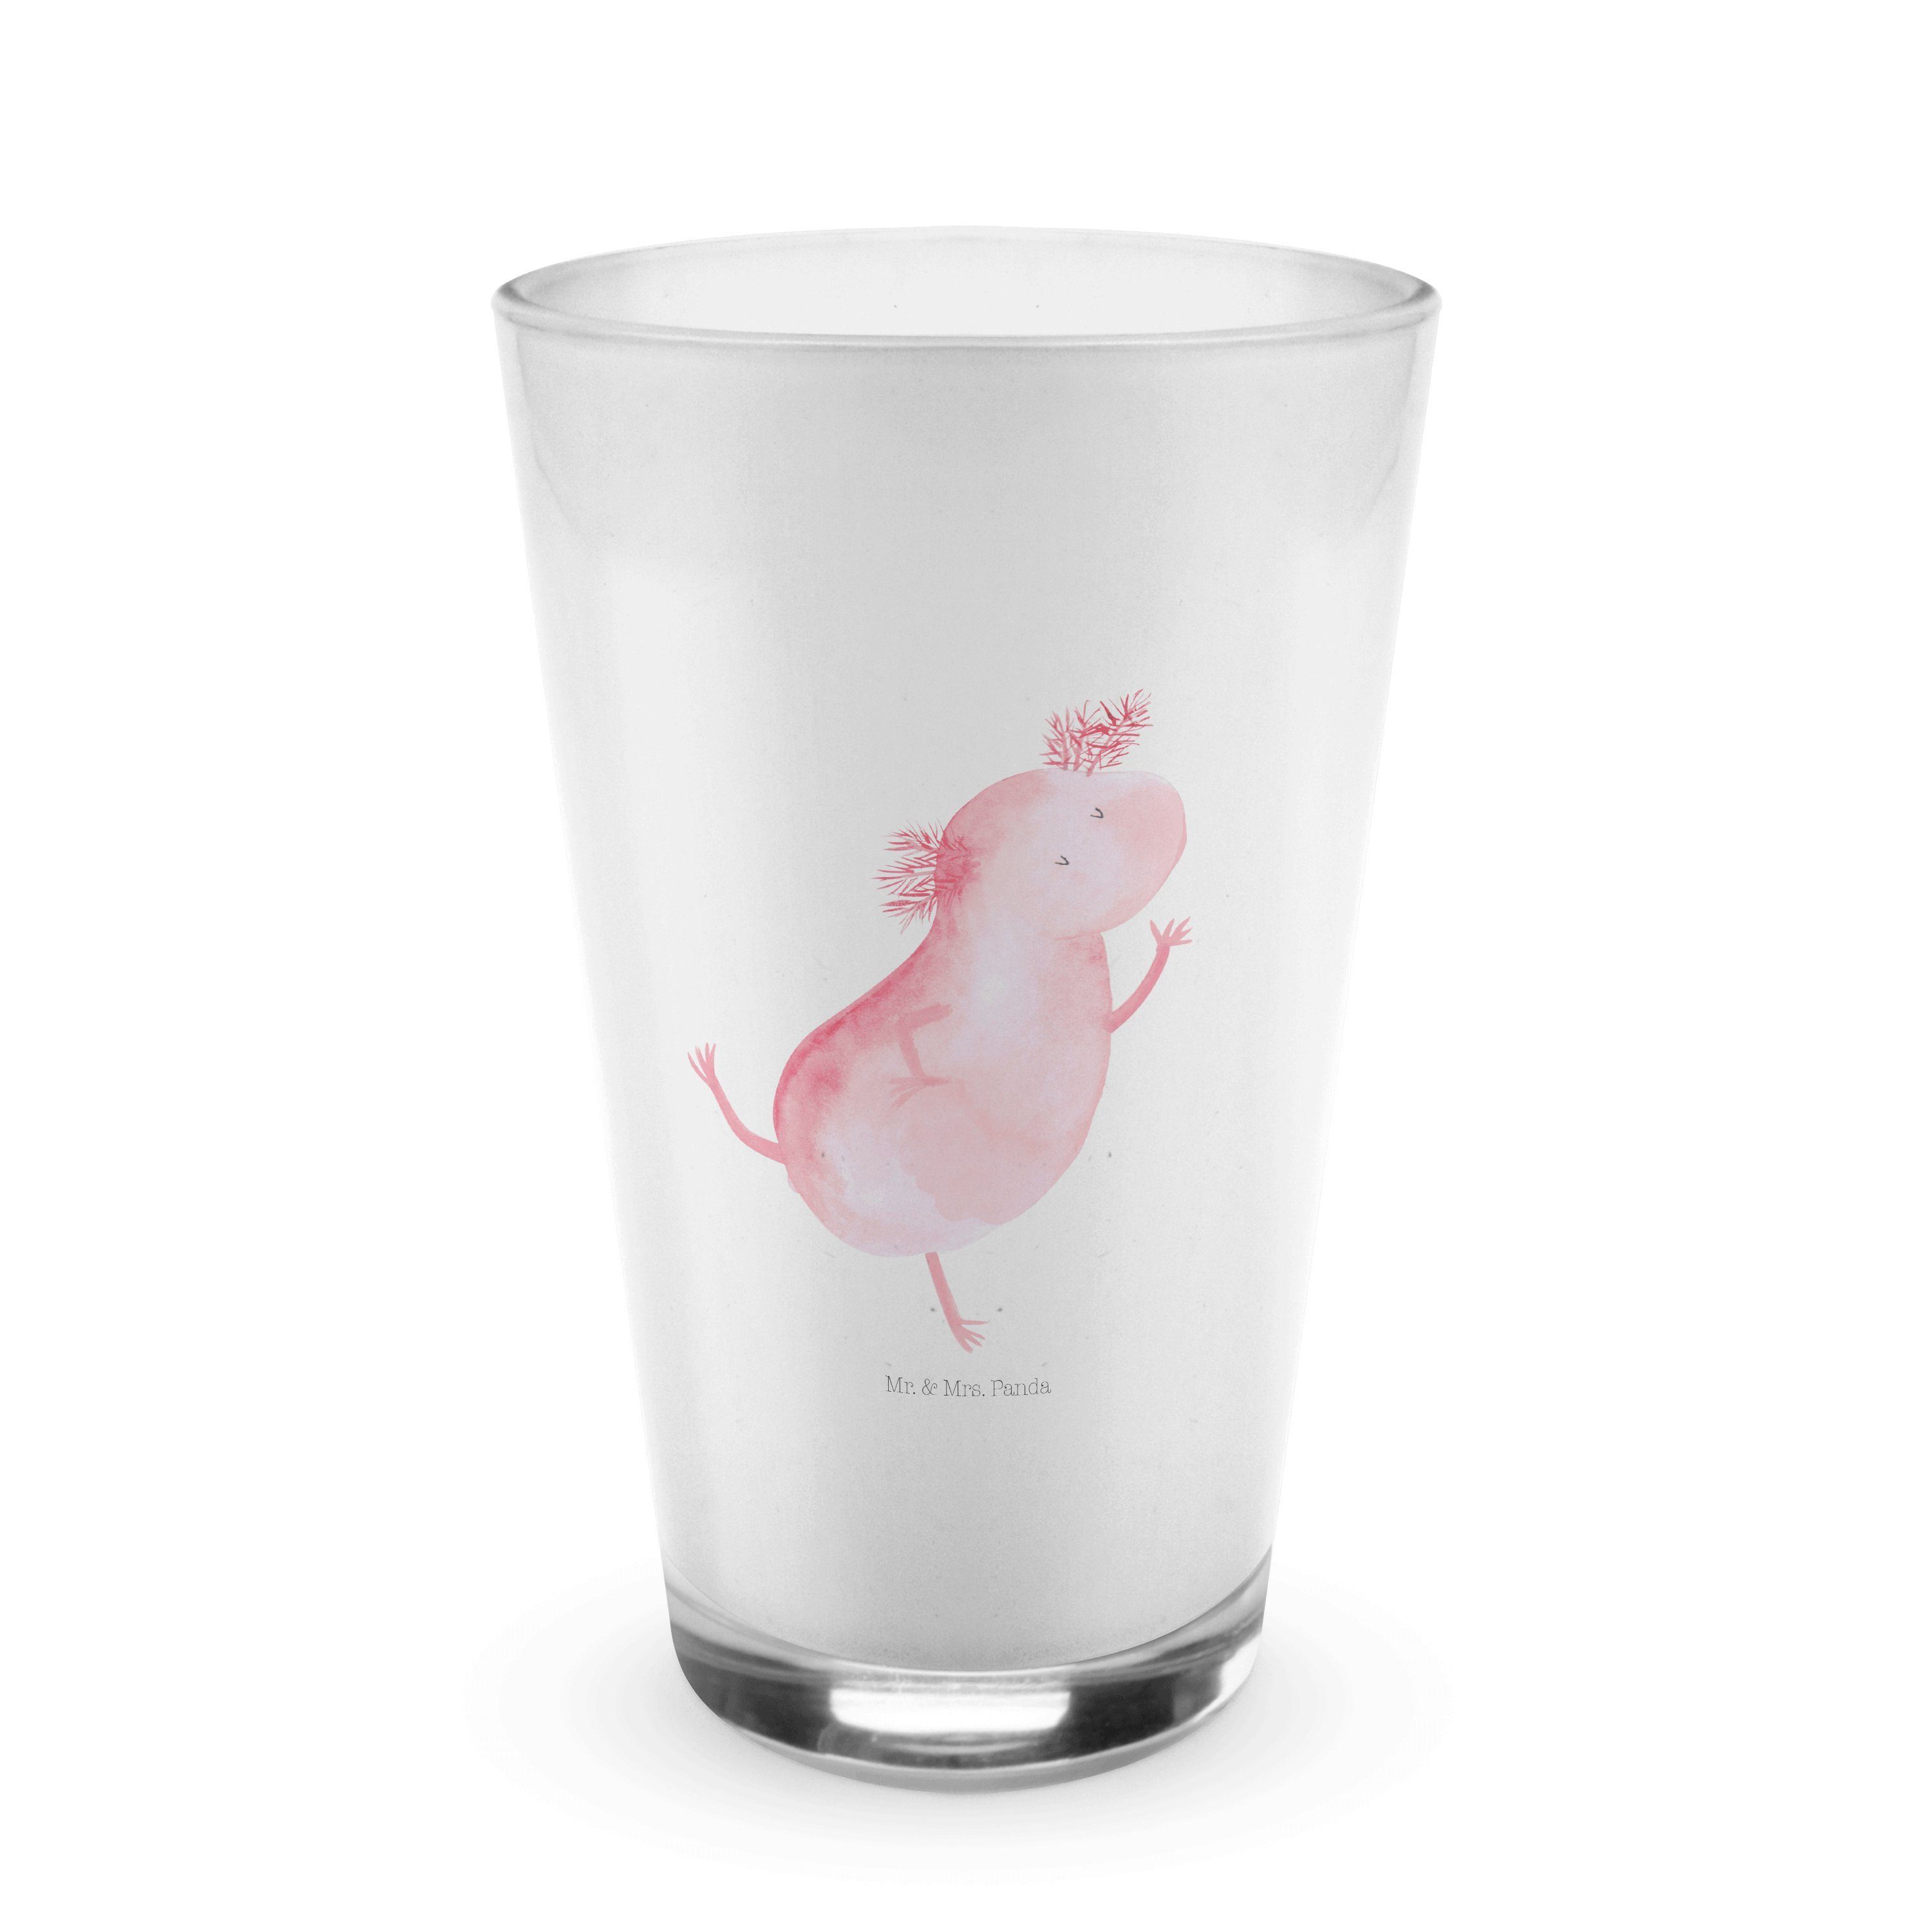 Mr. & Mrs. Panda tanzt Schwanzlurch, Glas Premium Glas Cappuccino Axolotl Tass, - - Geschenk, Transparent